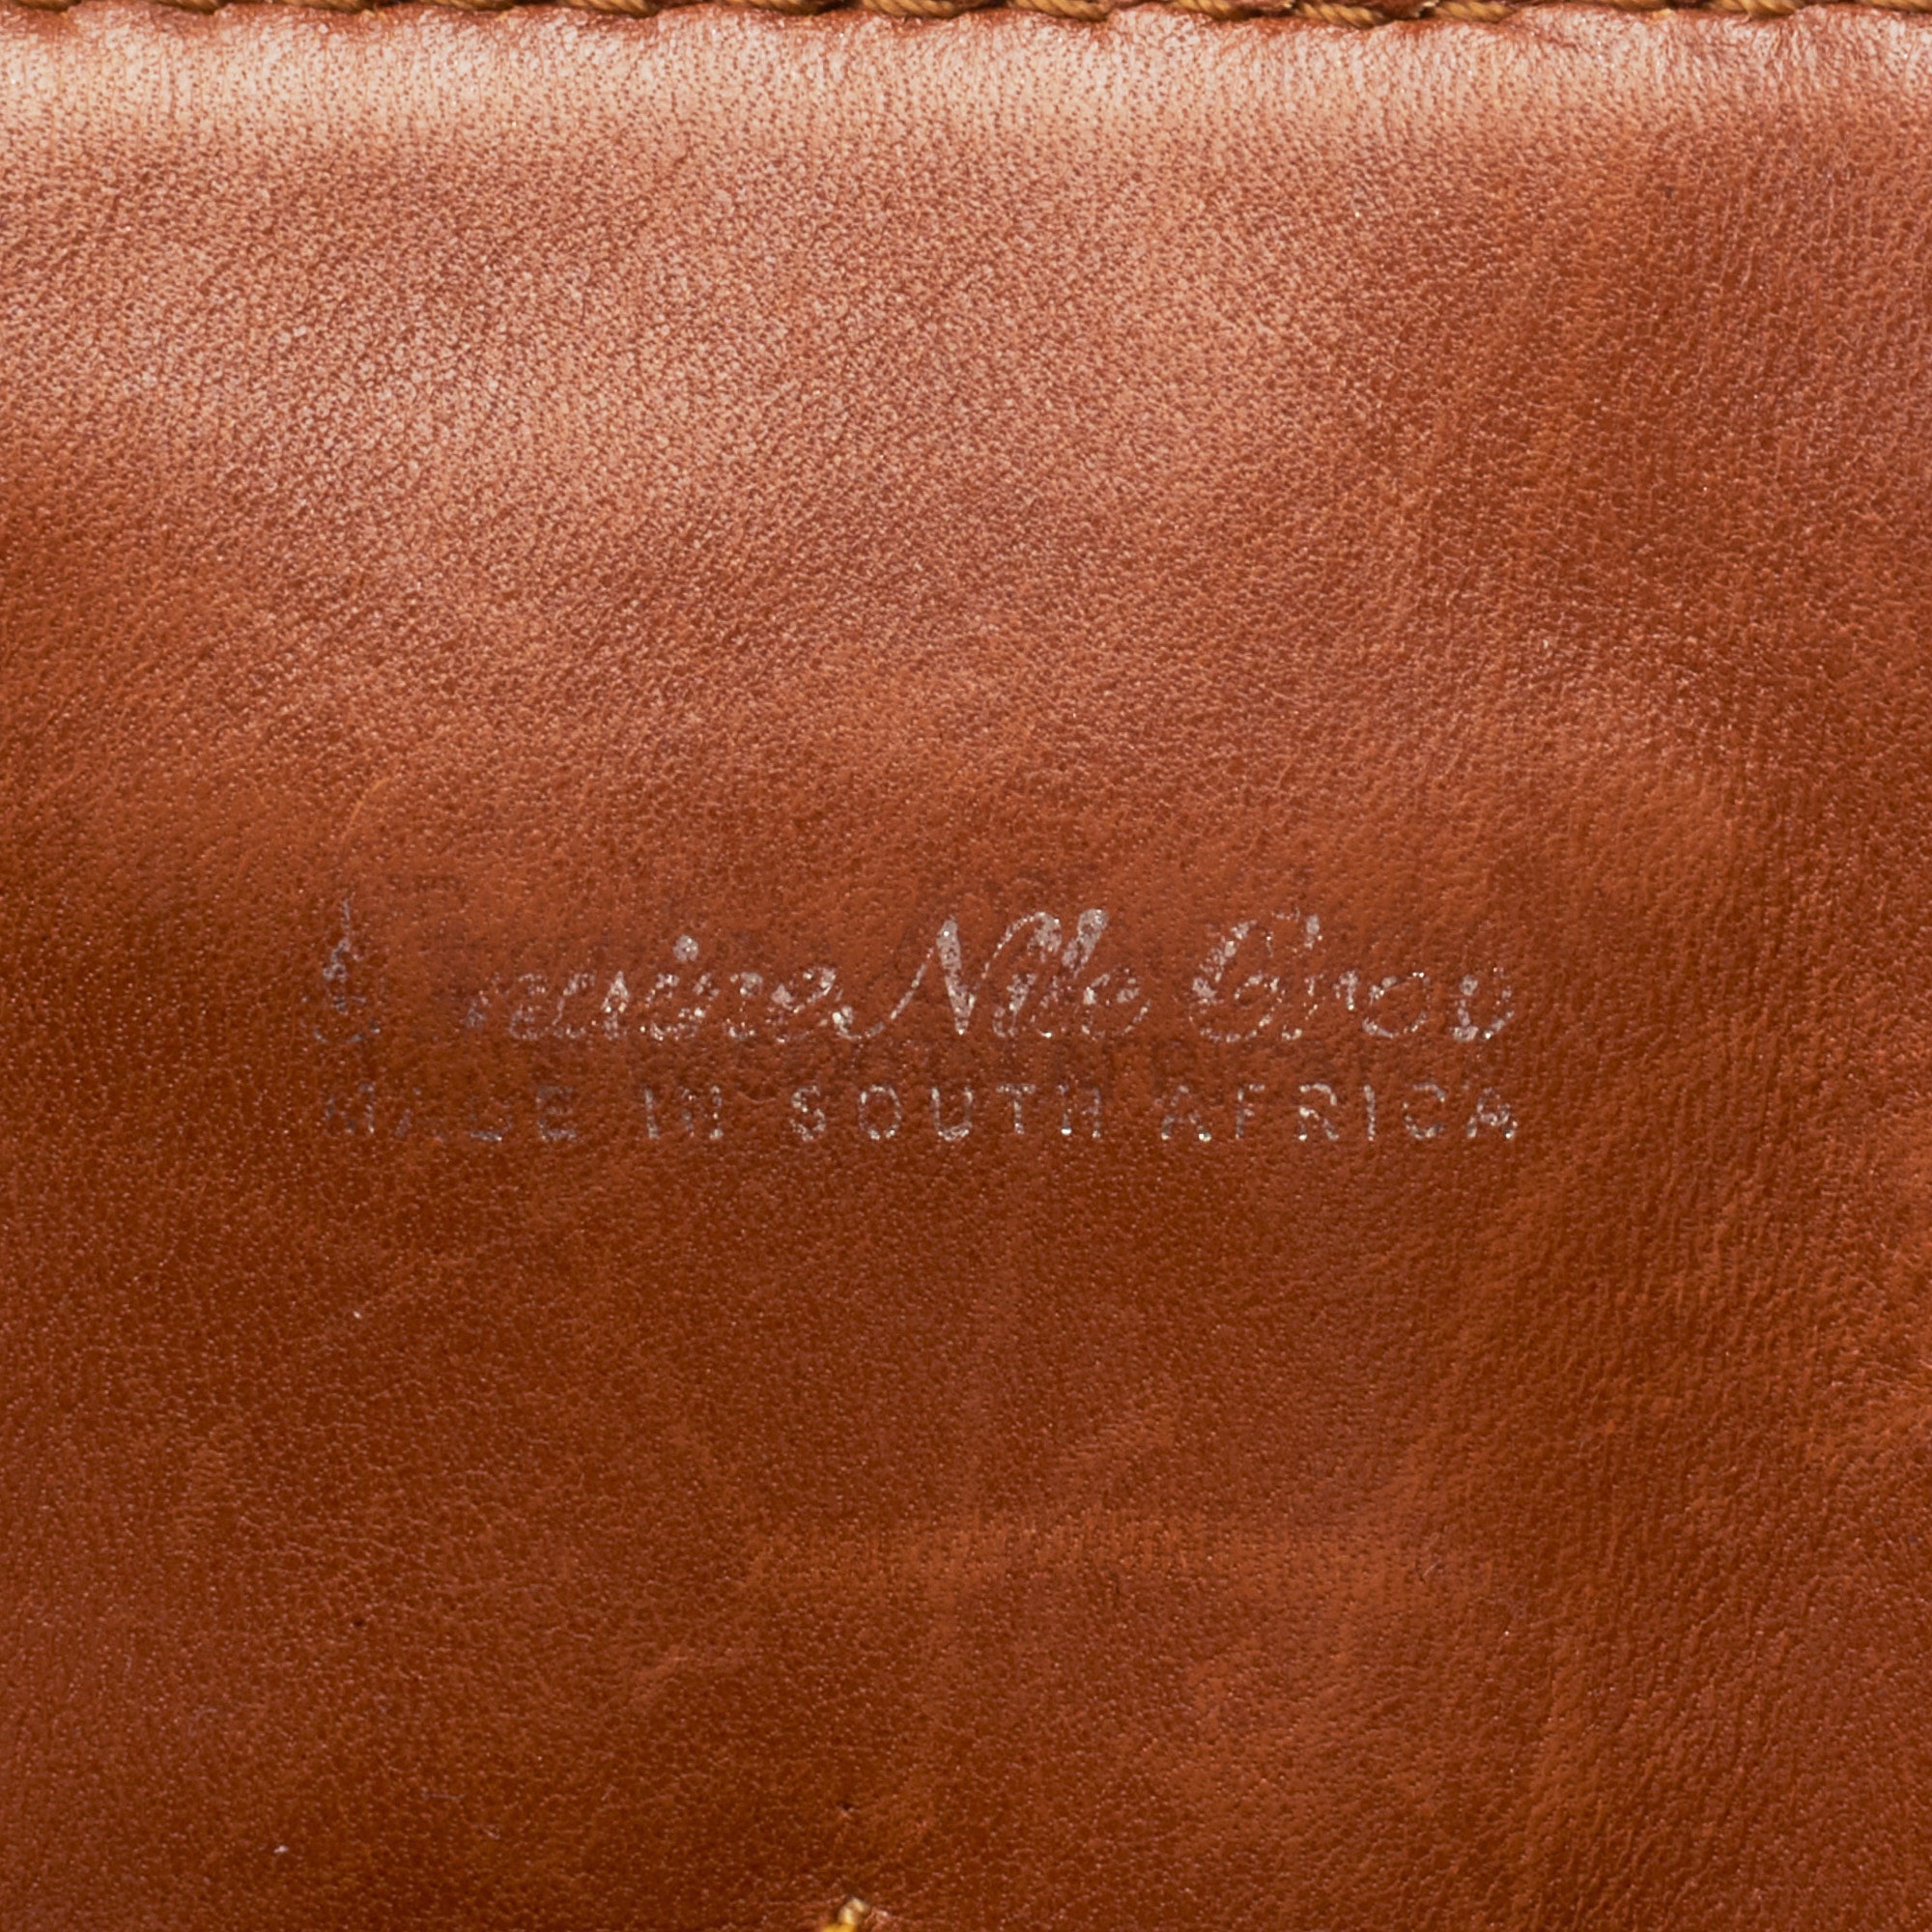 Ultra Rare GOYARD Paris Handmade Black Leather Carry-On Travel